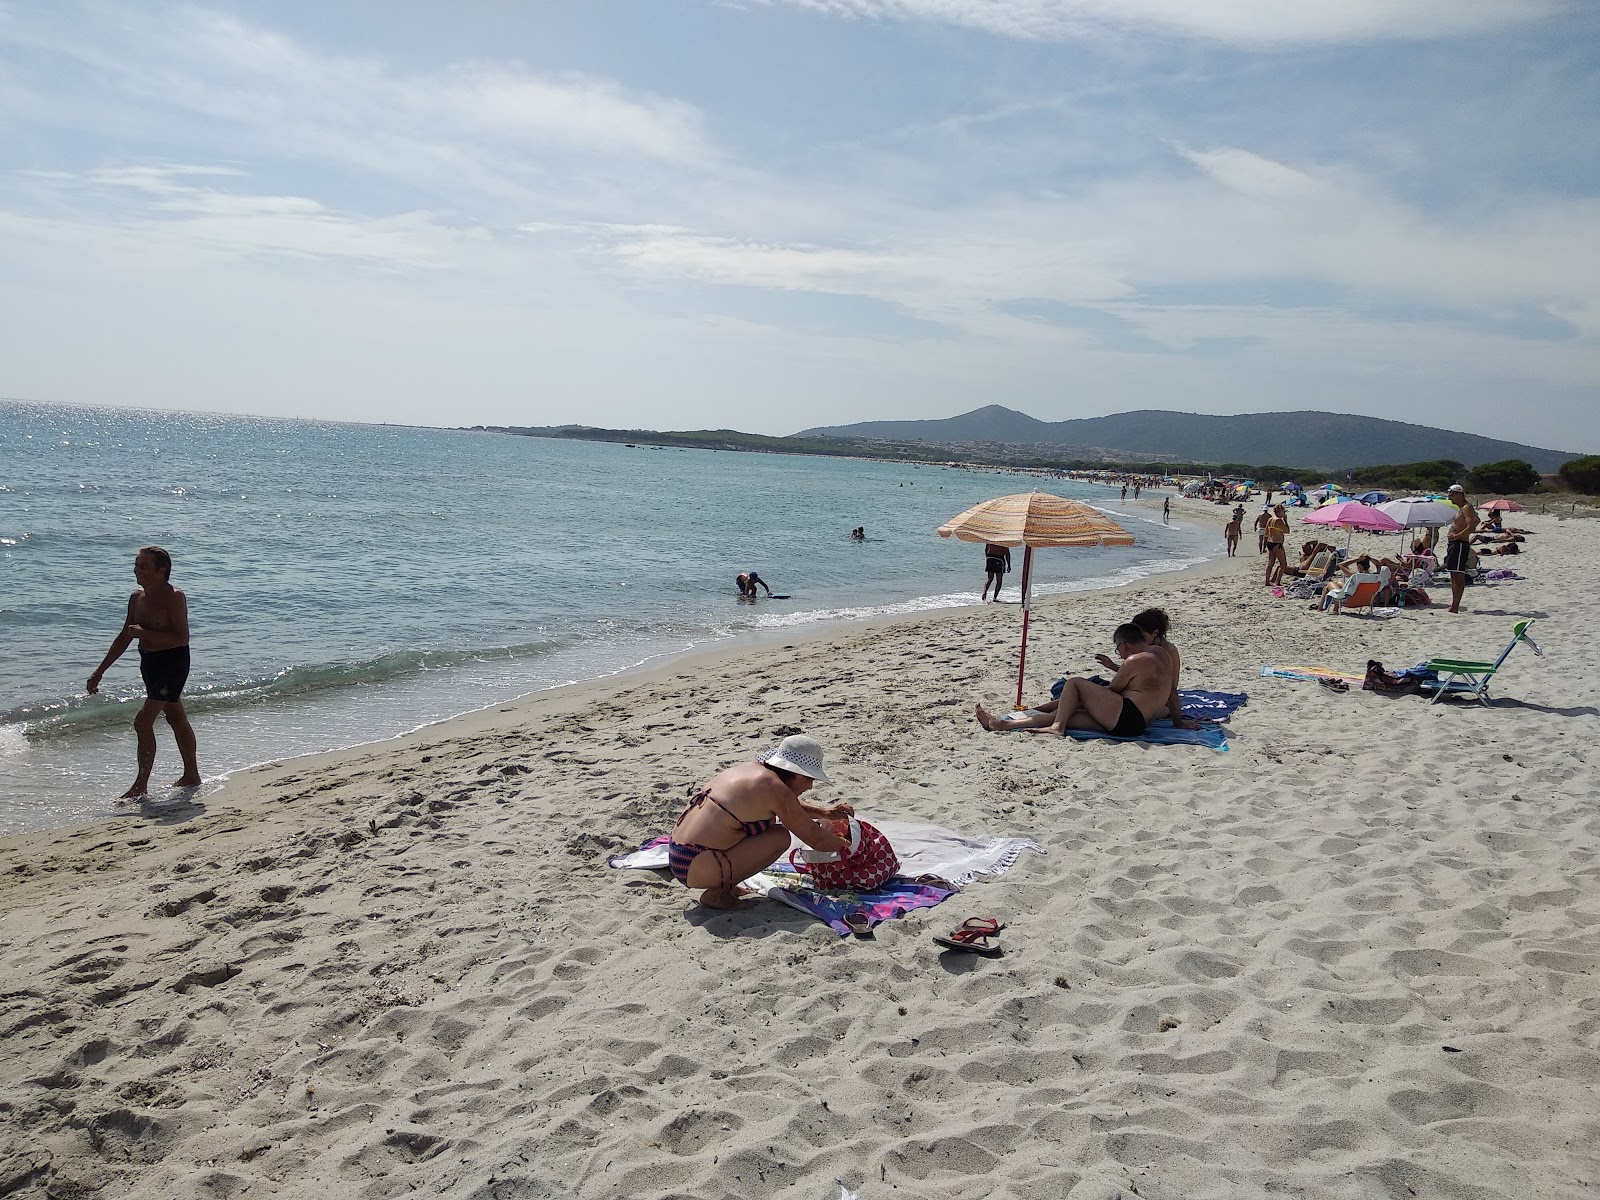 Foto de Spiaggia per Cani - lugar popular entre os apreciadores de relaxamento